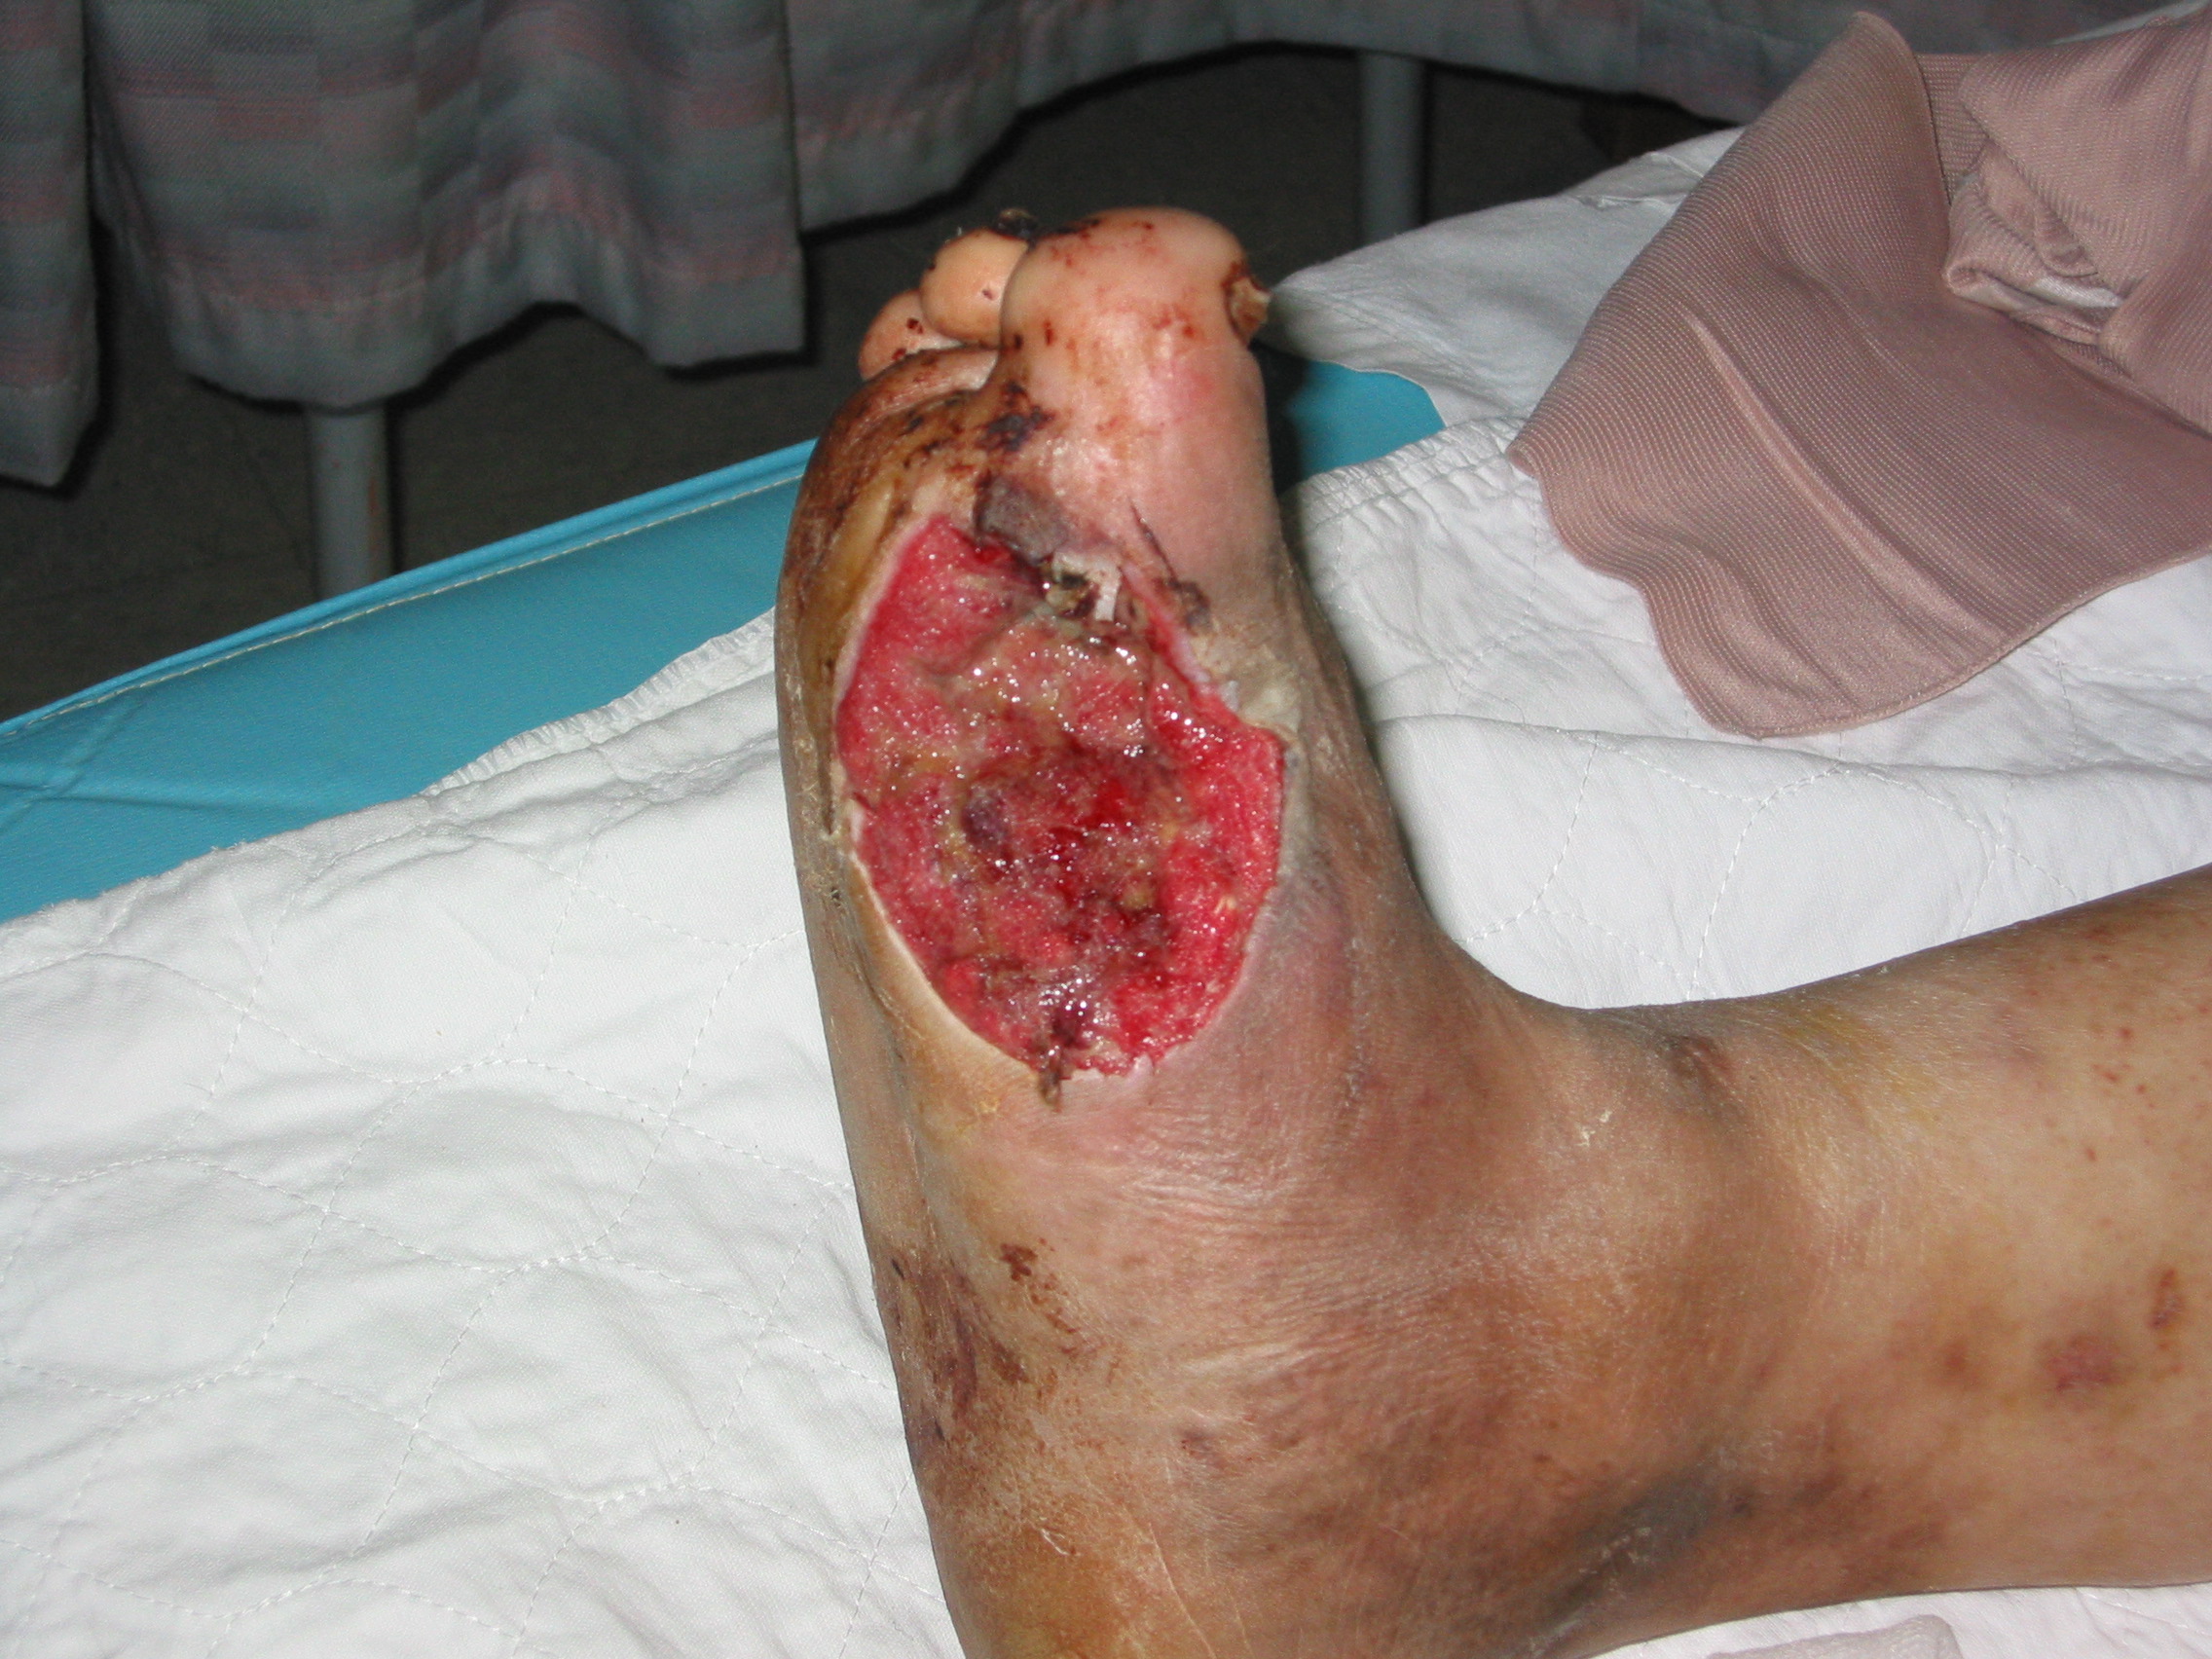 Amniotic graft diabetic foot ulcers - Foot Doctor San Diego / La Jolla